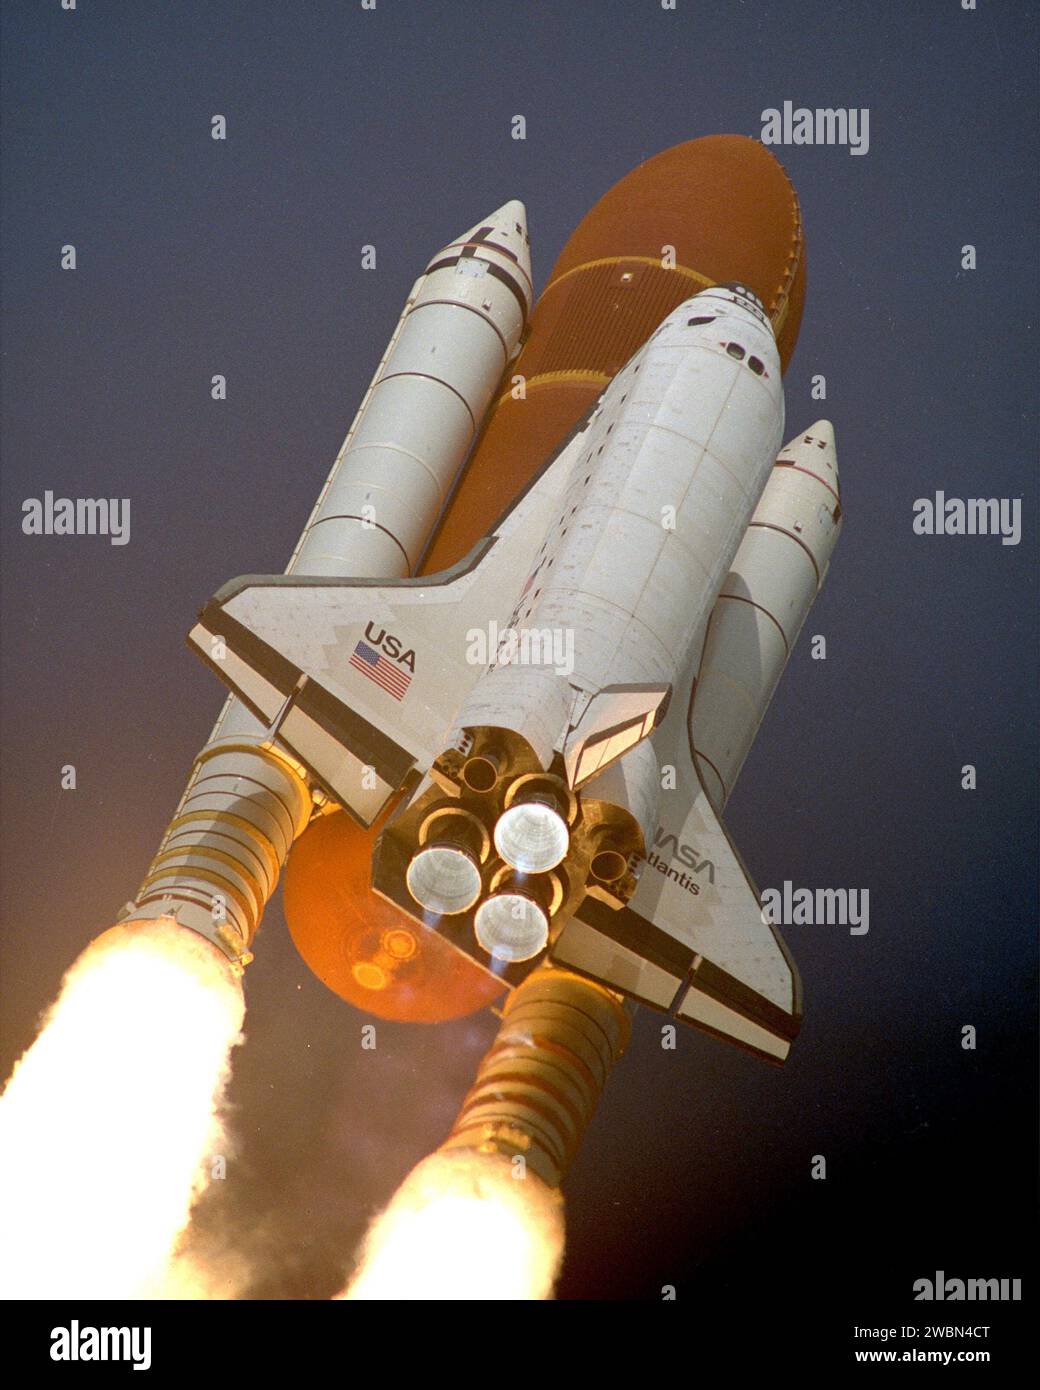 KENNEDY SPACE CENTER, FLA. -- STS-45 Atlantis Stock Photo